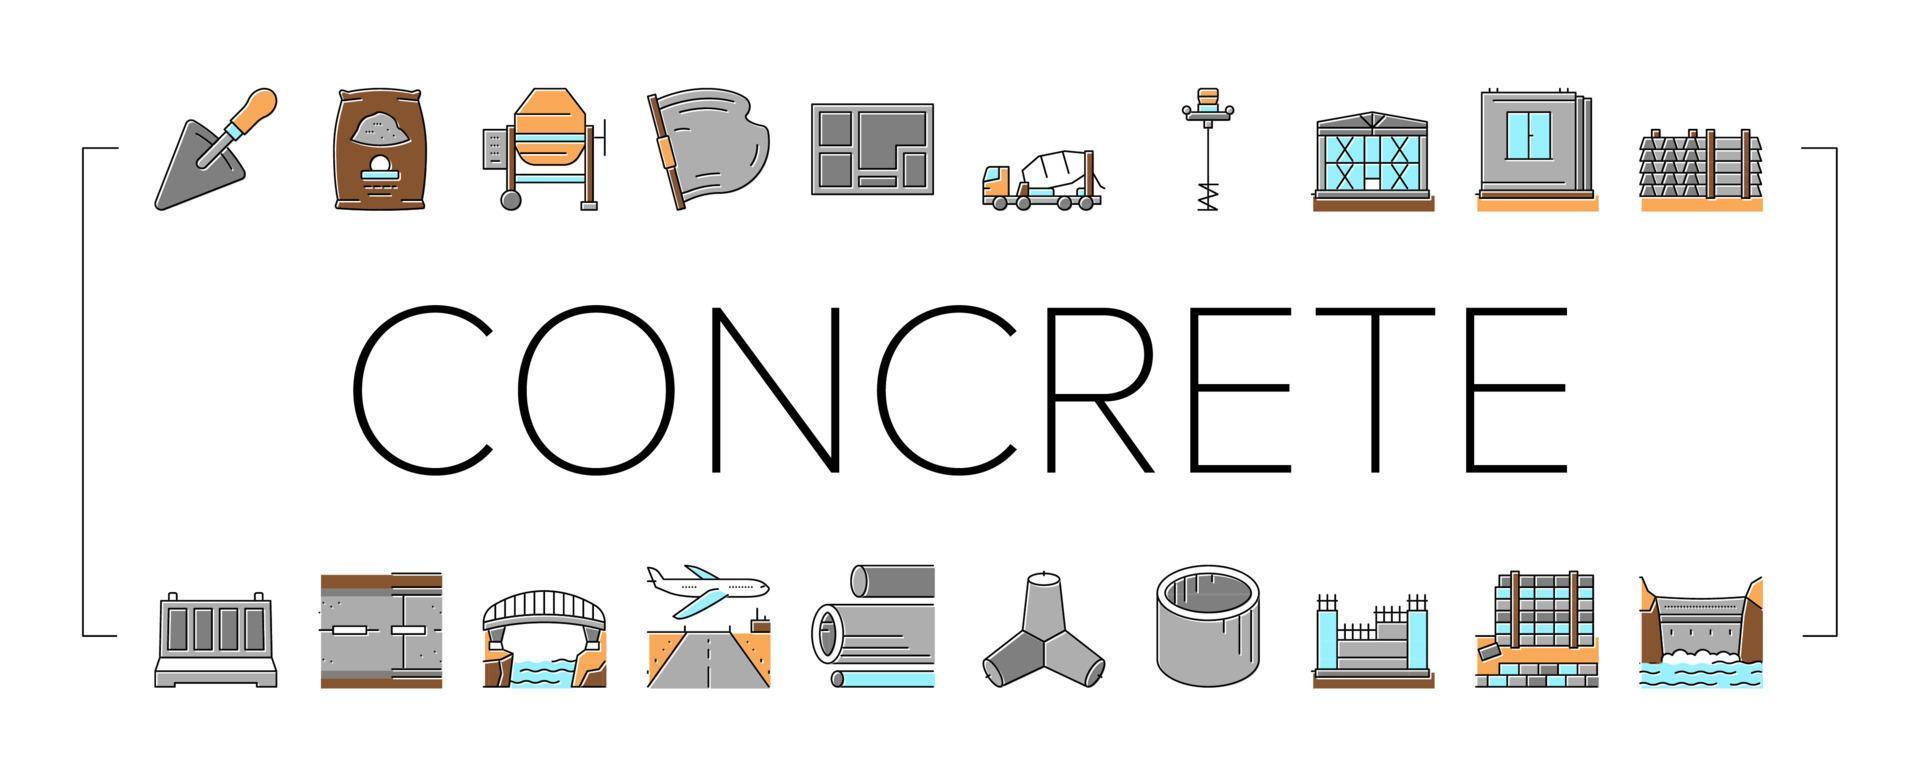 Concrete Production Collection Icons Set Vector